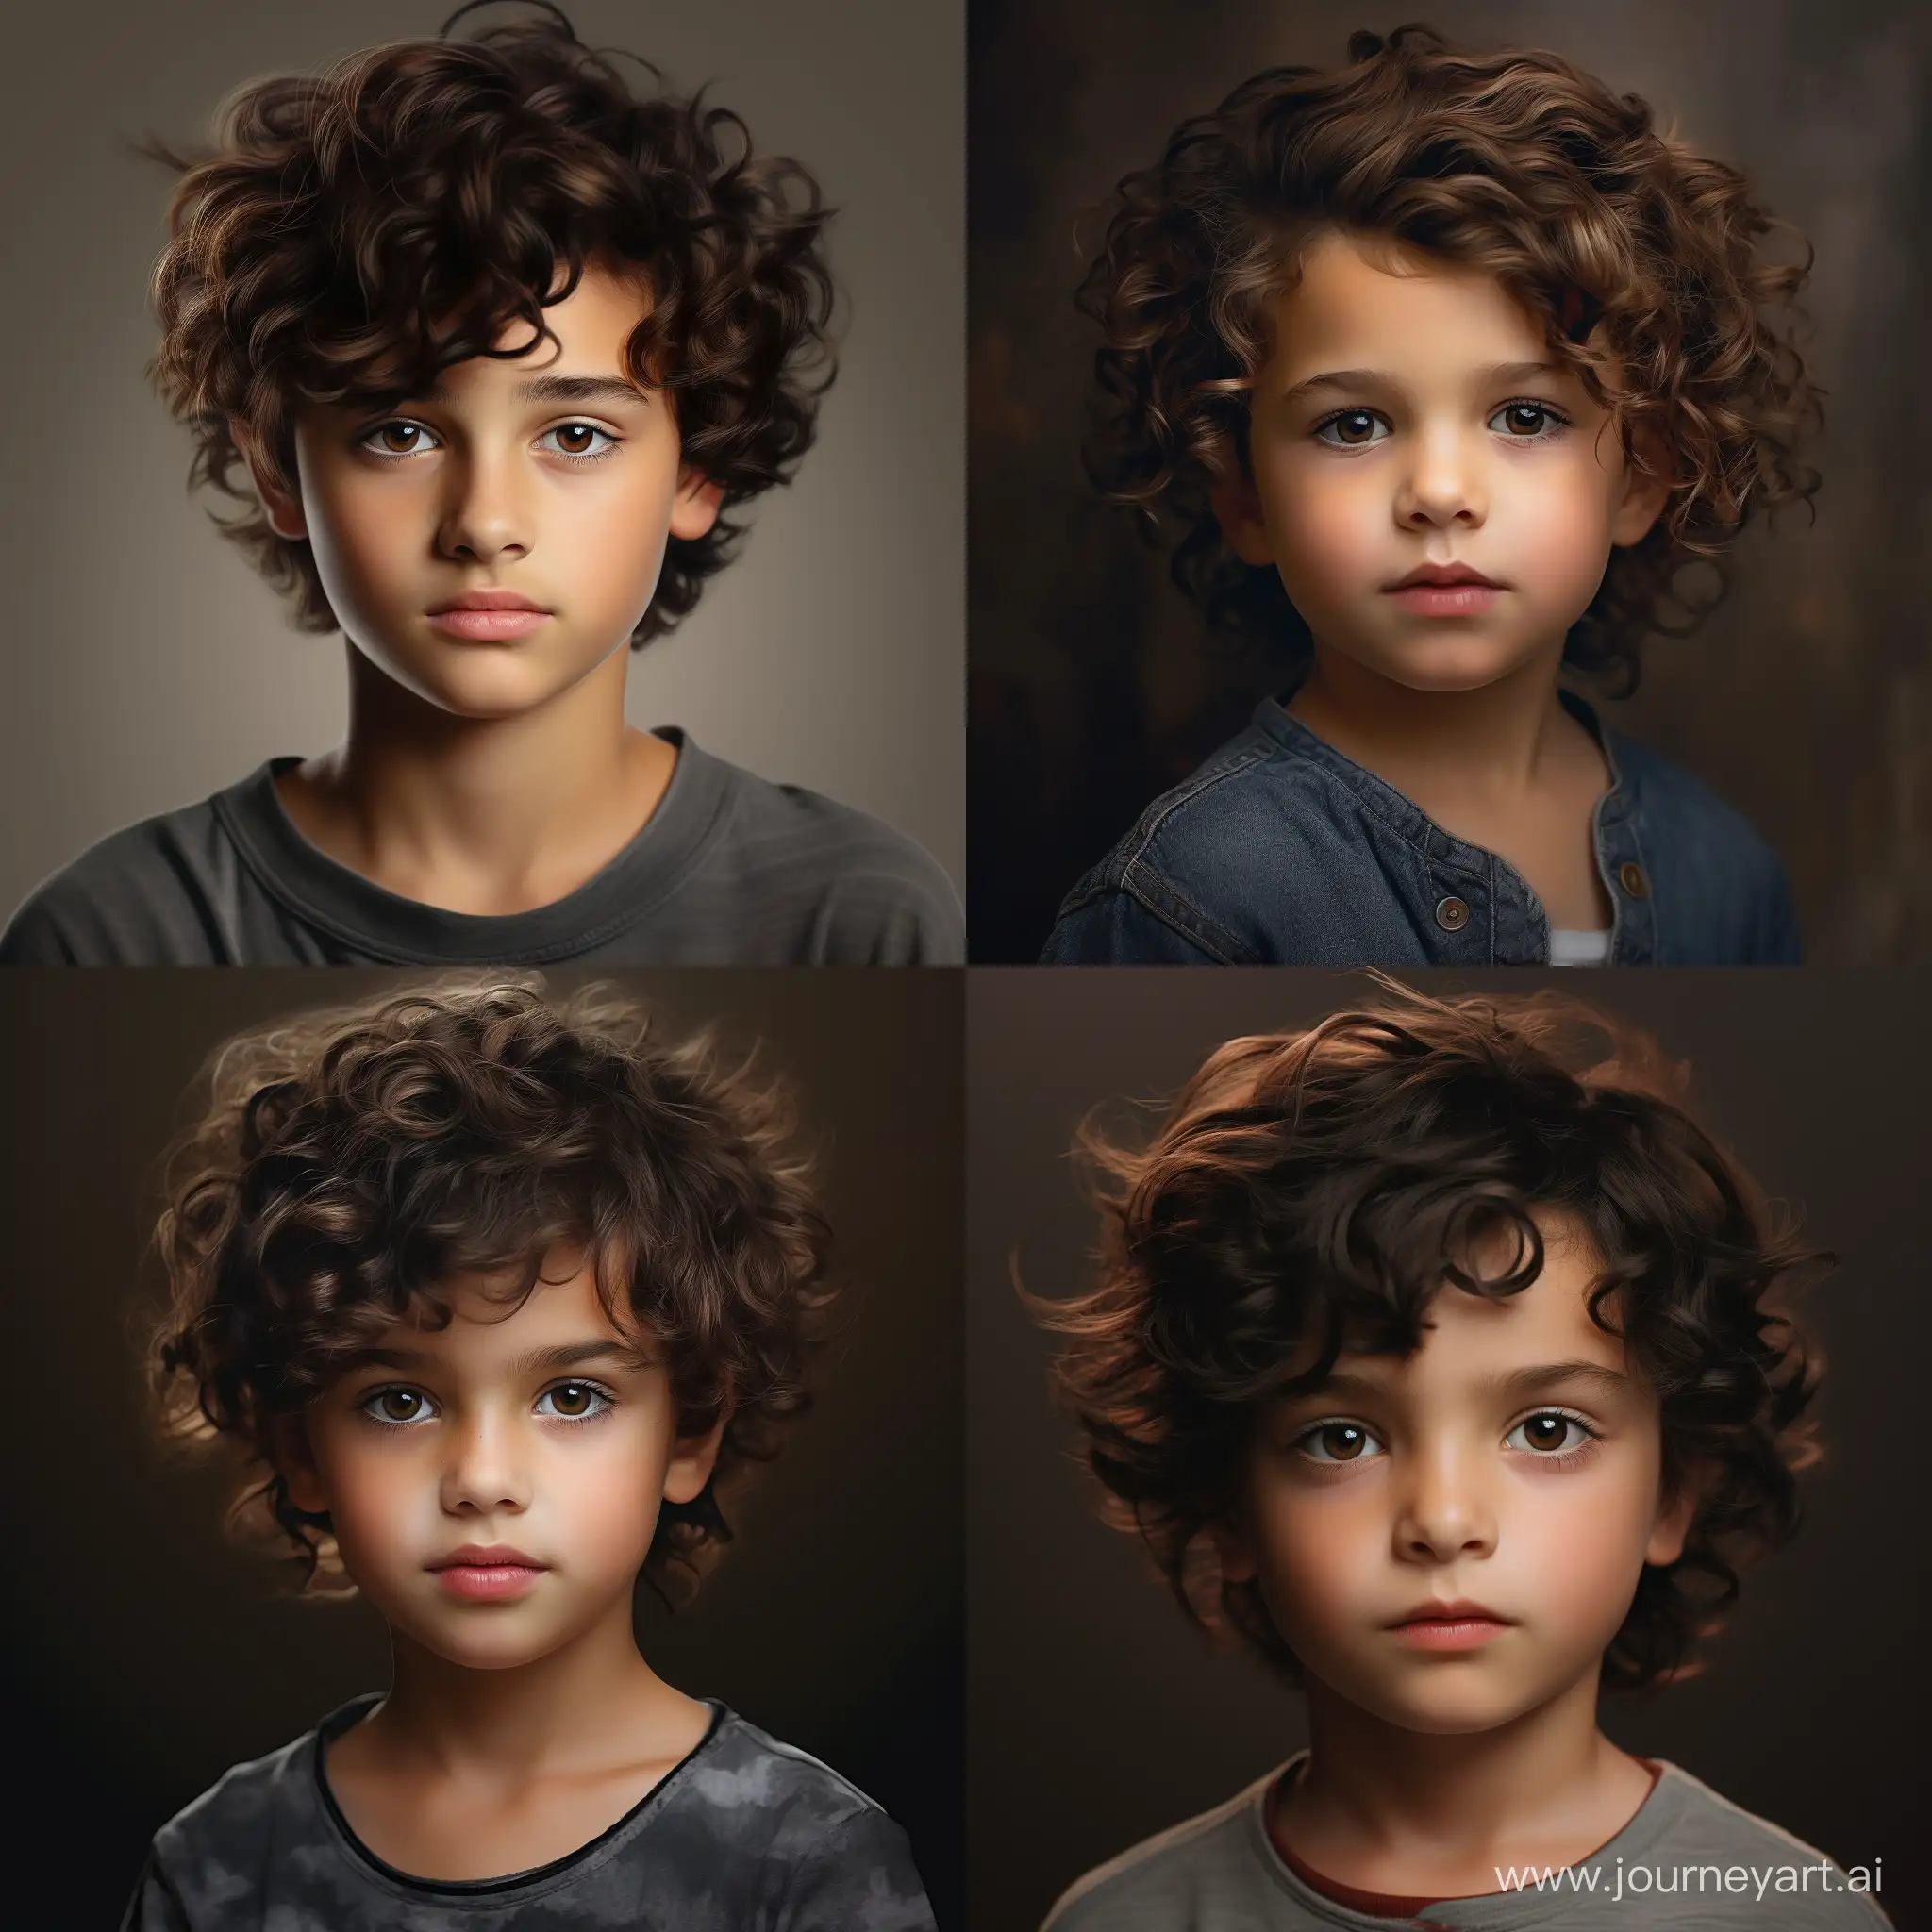 Realistic-Portrait-of-a-Boy-with-Curly-Dark-Hair